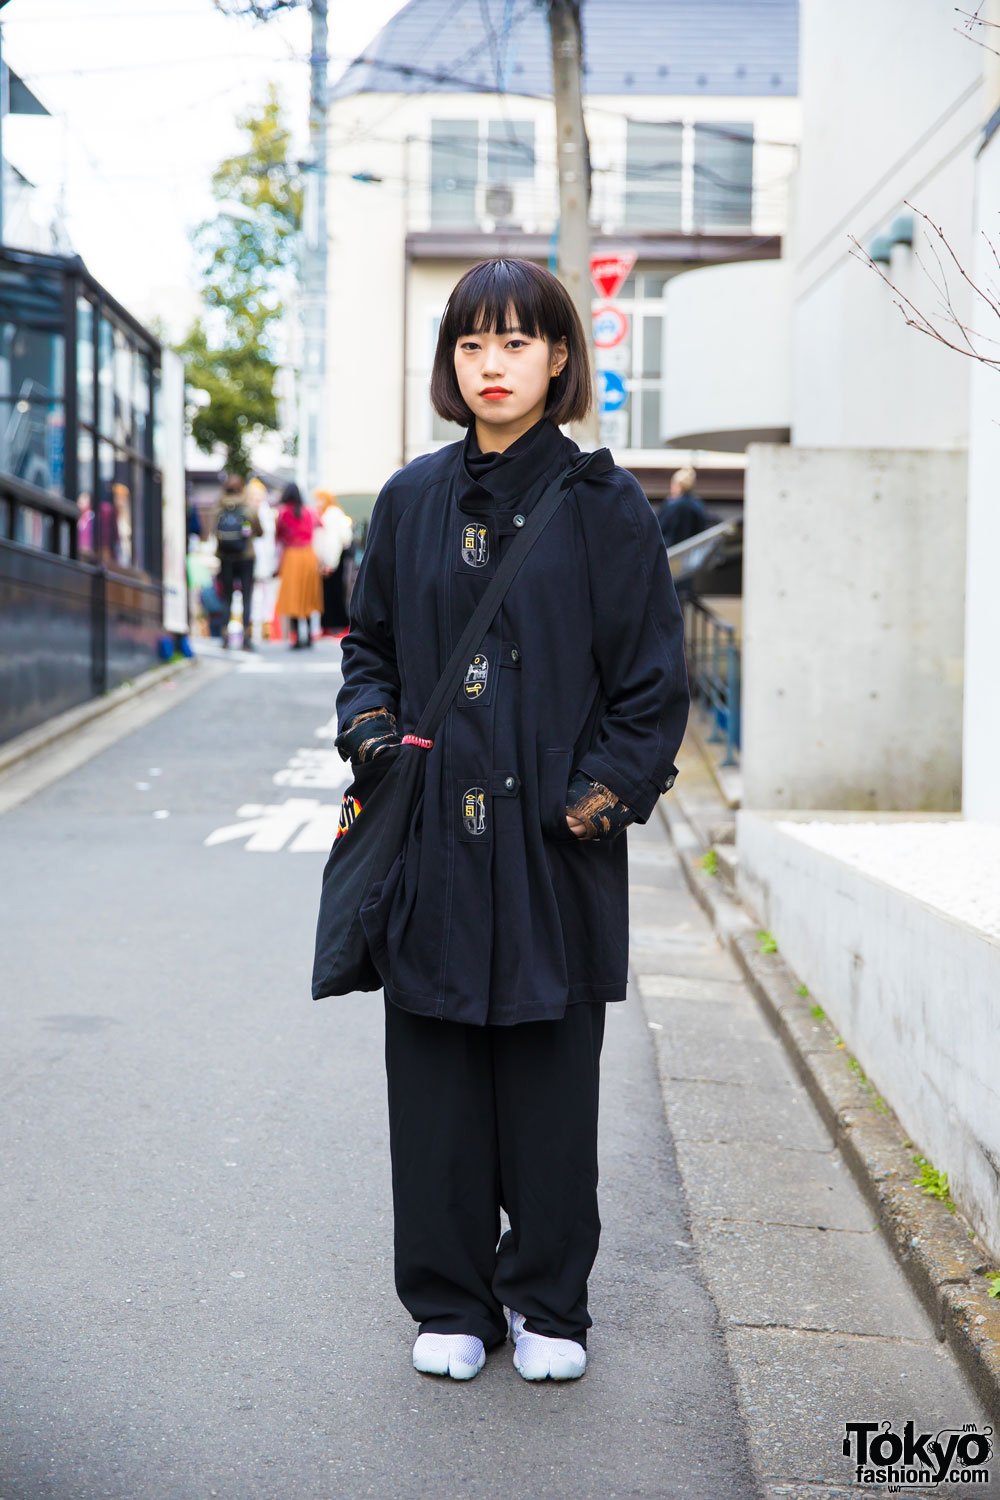 Tokyo Fashion on Twitter: "19-yr-old Harajuku girl w/ dark resale fashion, Nike Air Rift sneakers &amp; bag by Korean brand 8 Seconds #原宿 https://t.co/FemF8mUeZG https://t.co/eAB37YBuT5" / Twitter